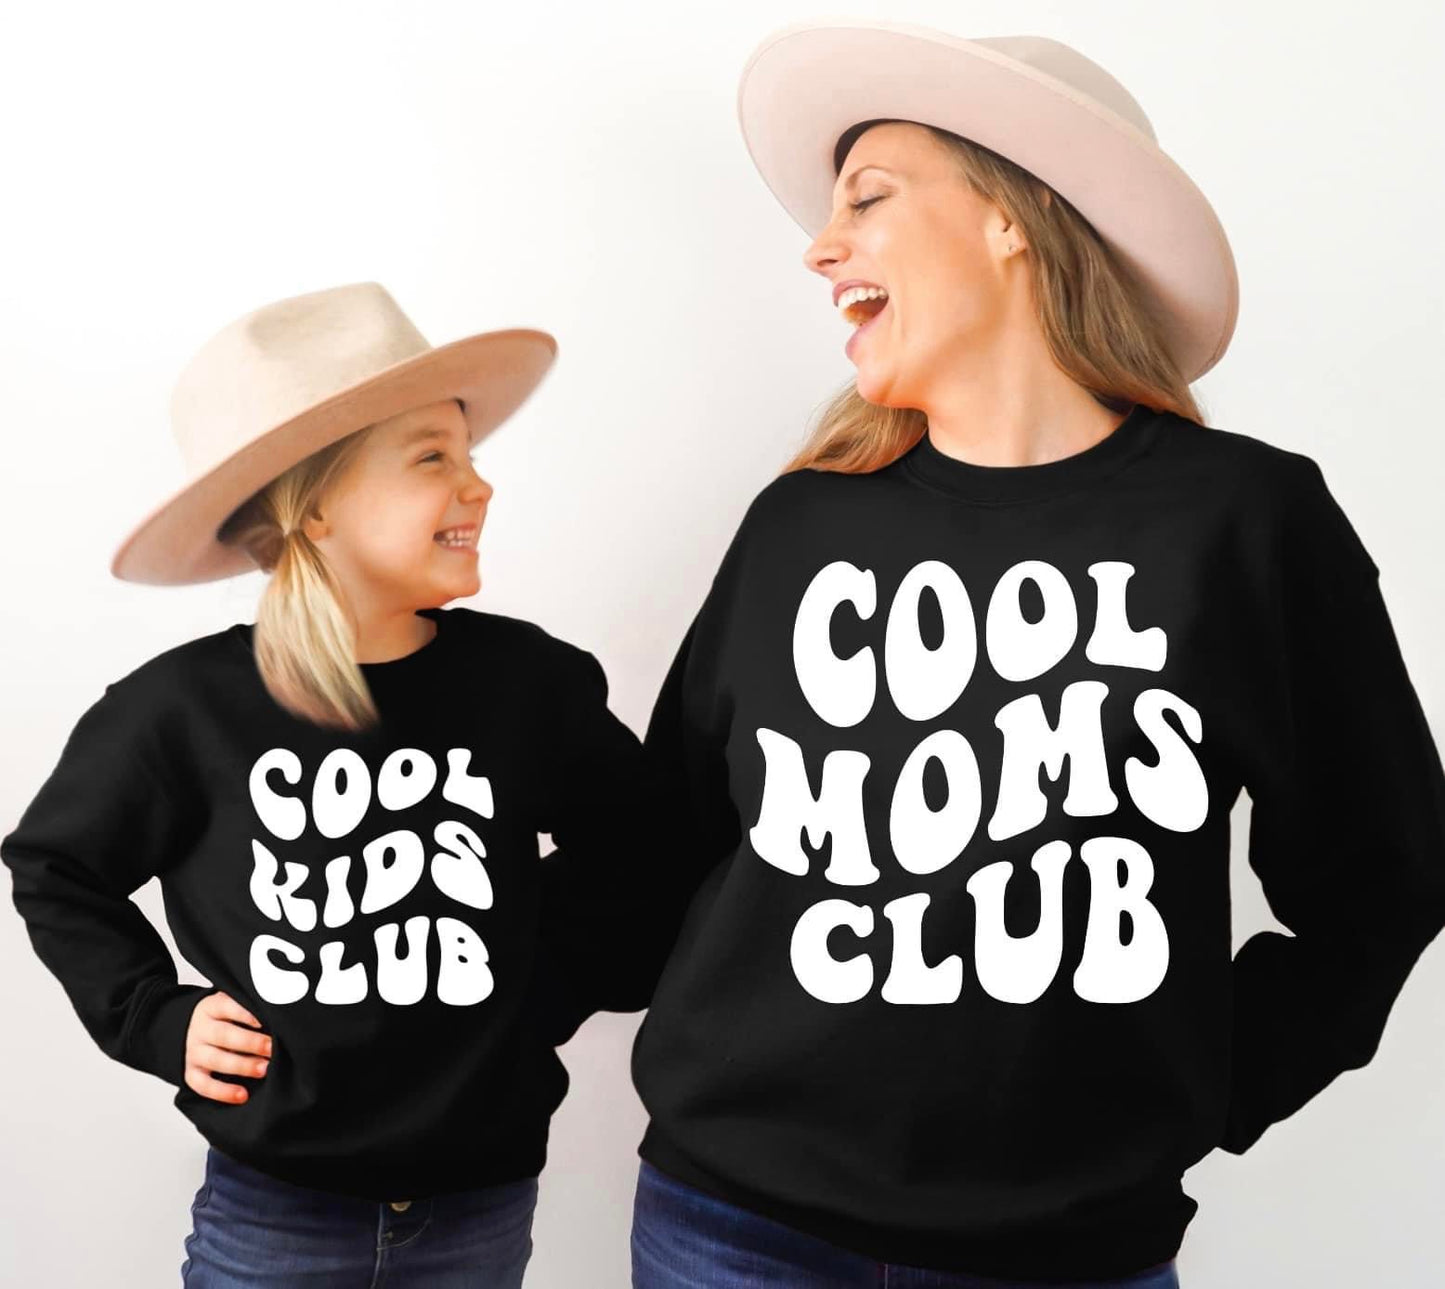 COOL KIDS CLUB COOL MOMS CLUB